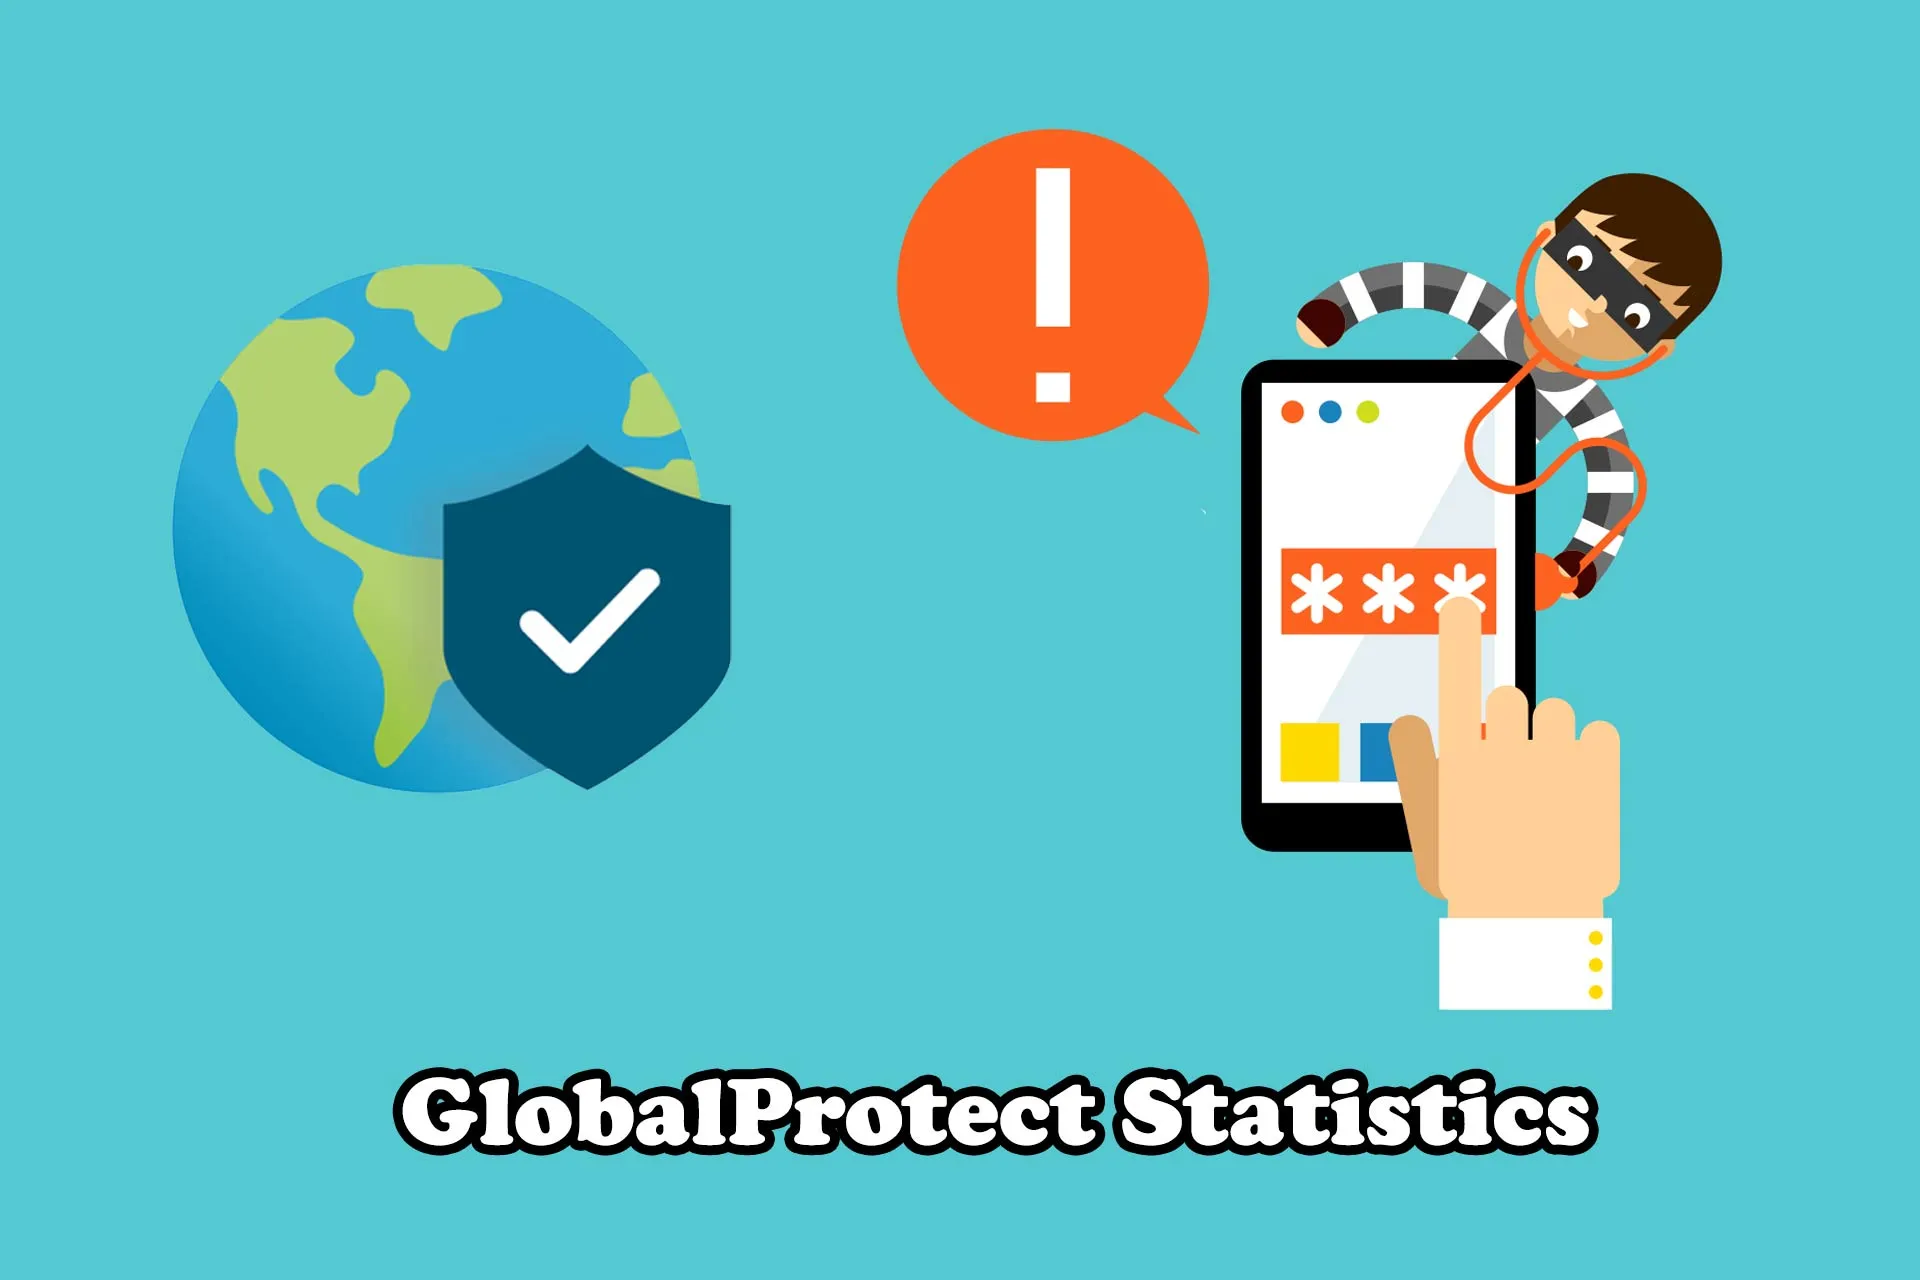 GlobalProtect statistics